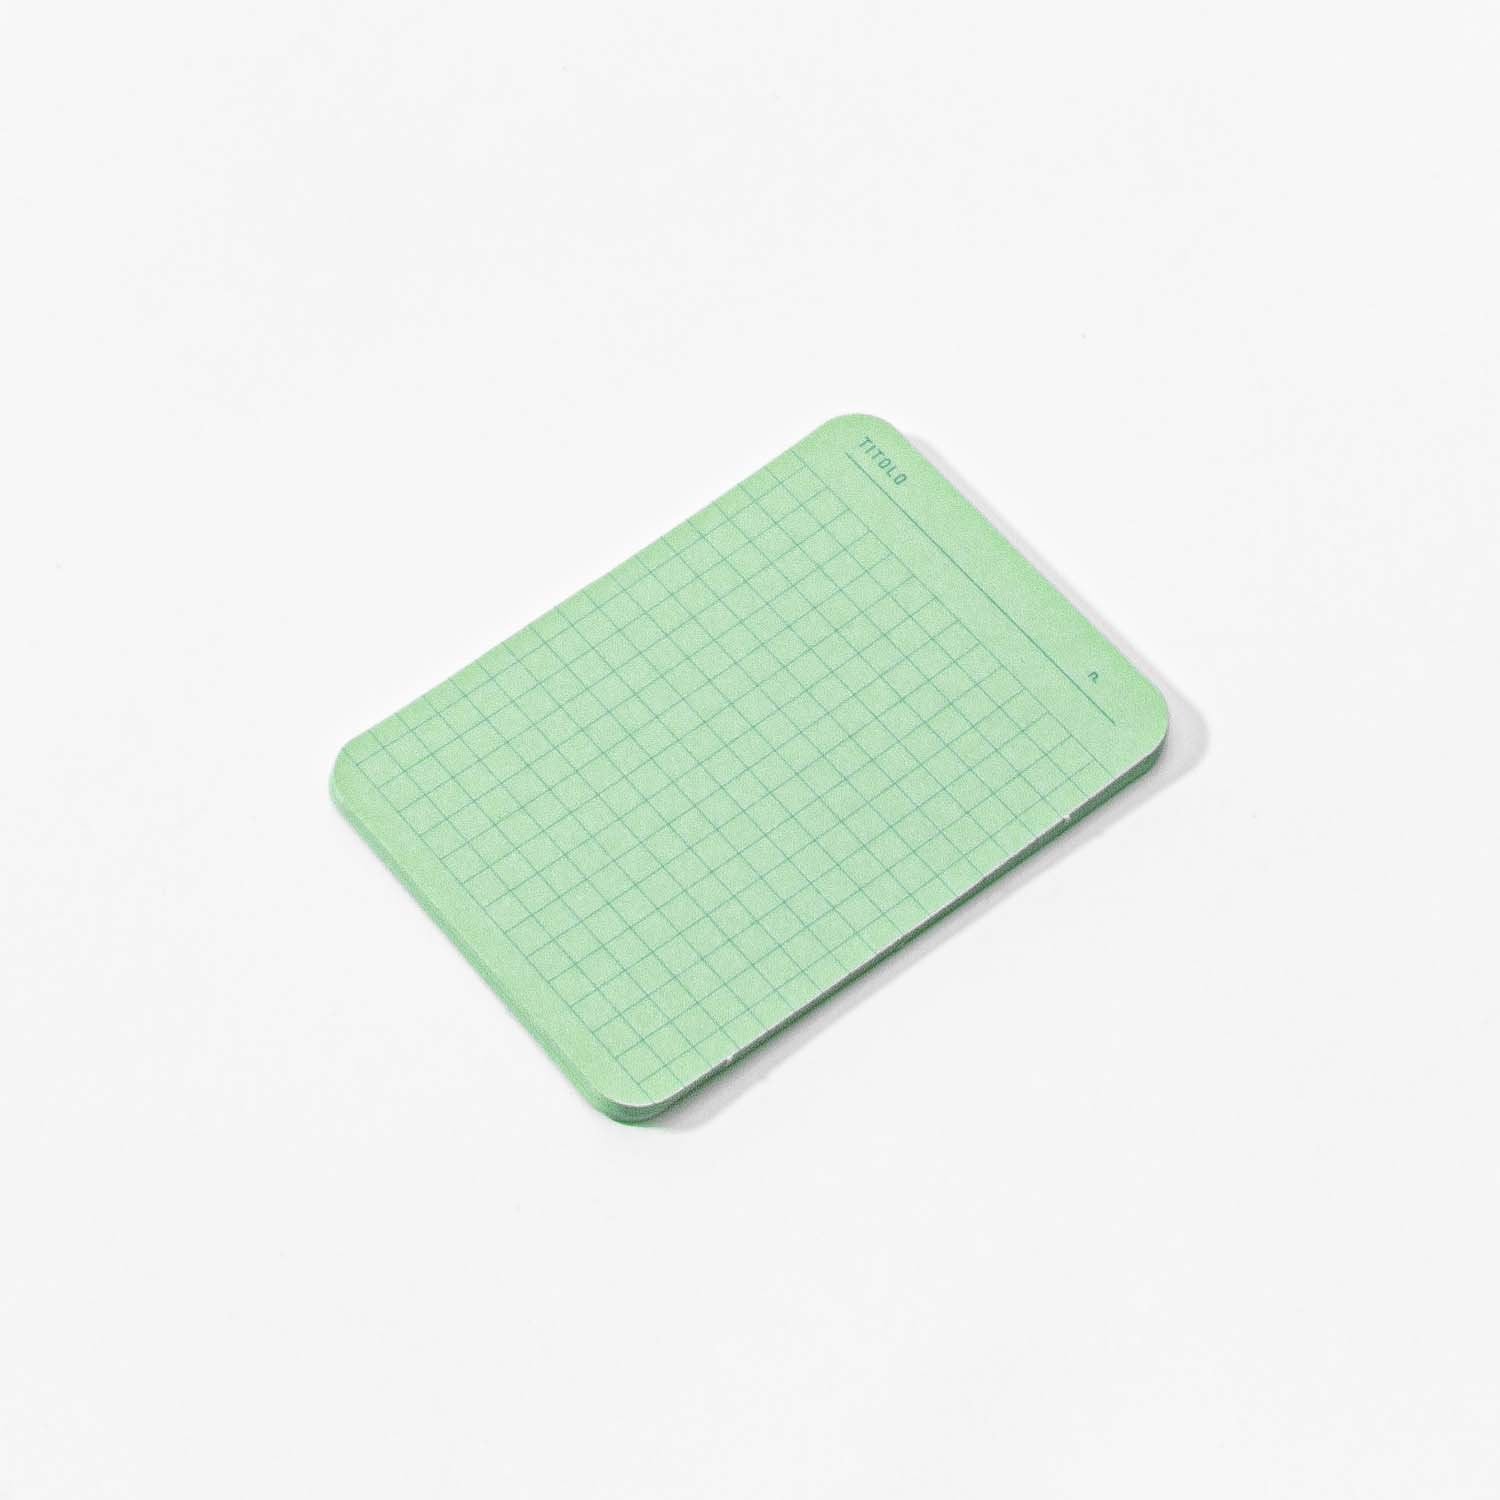 Foglietto - A7 Memo Cards - Quadrato - deck 120 cards-Memo cards-DutchMills